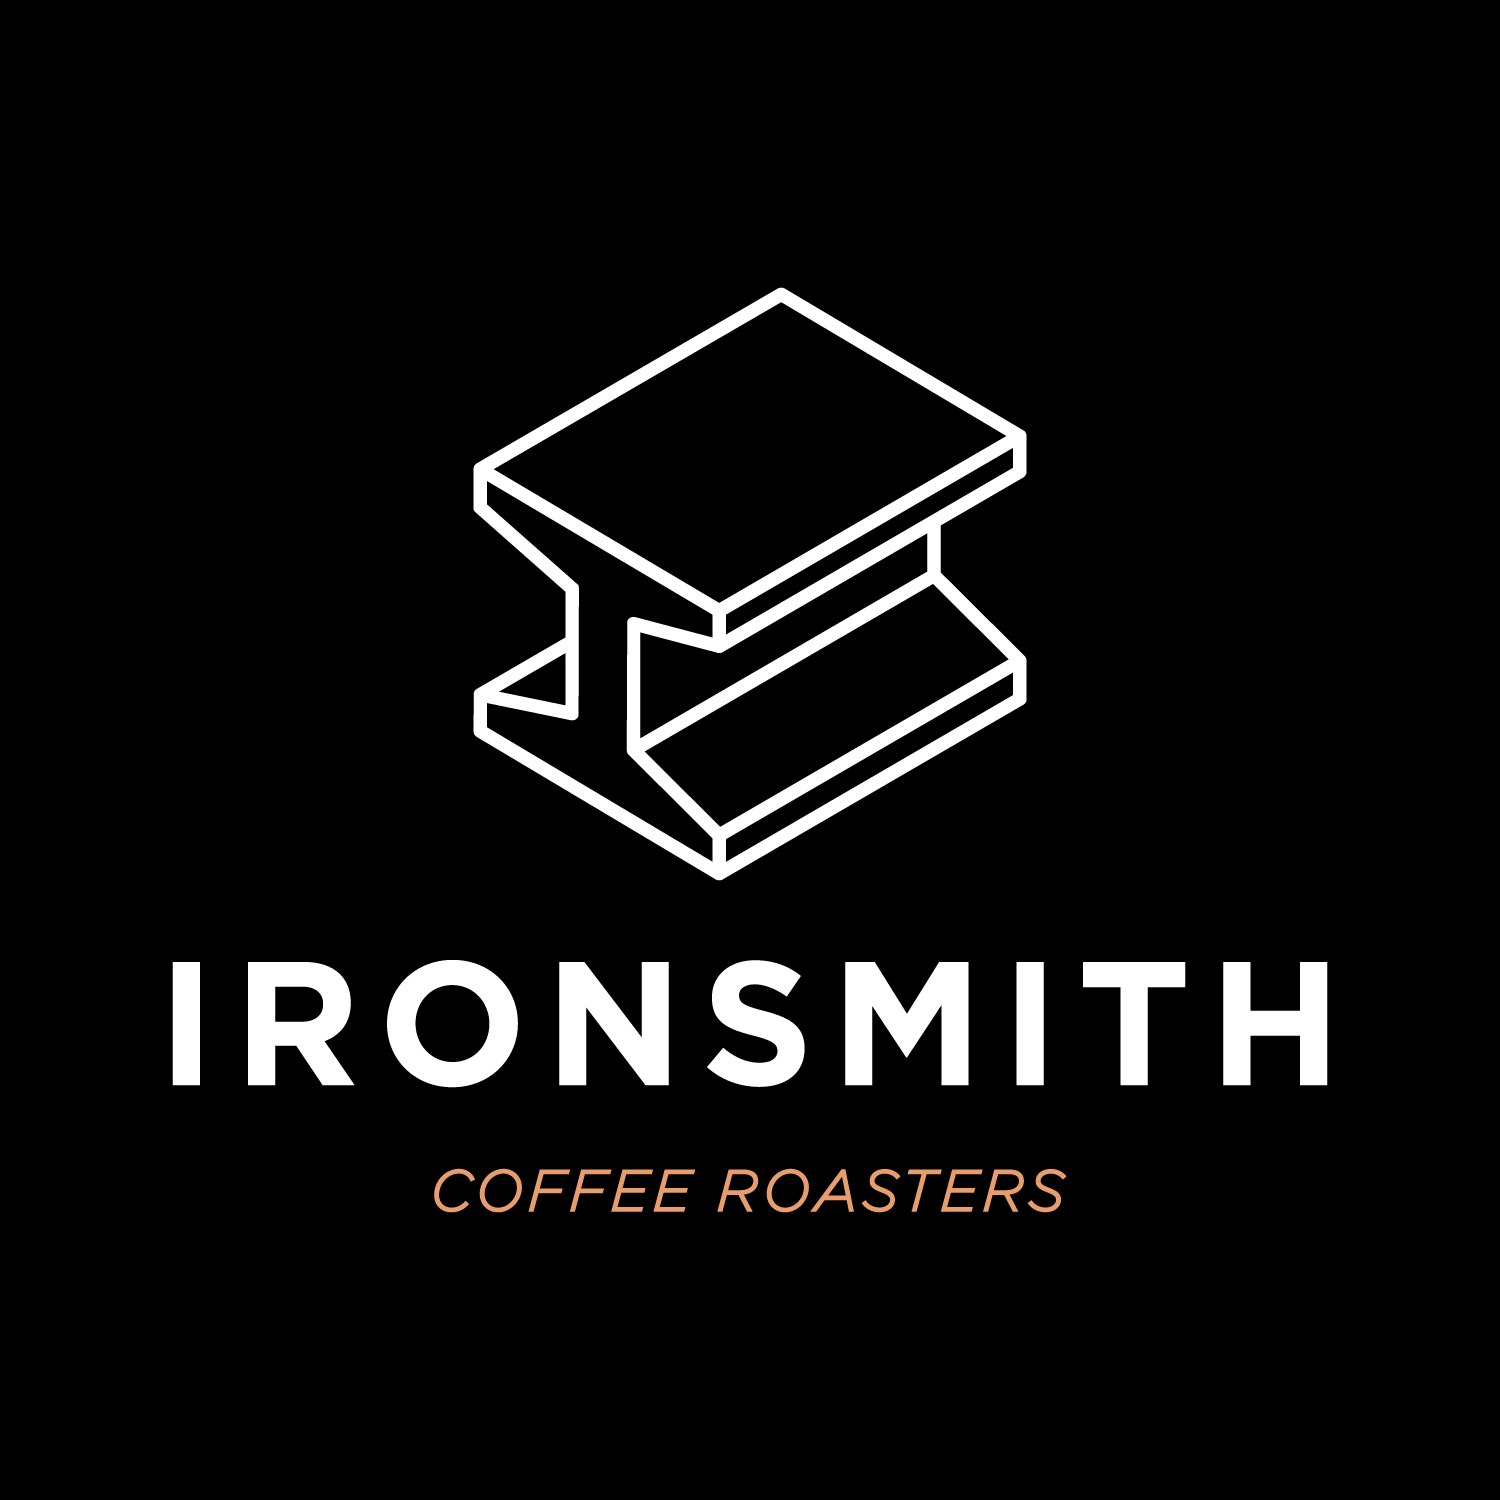 Ironsmith Coffee Roasters